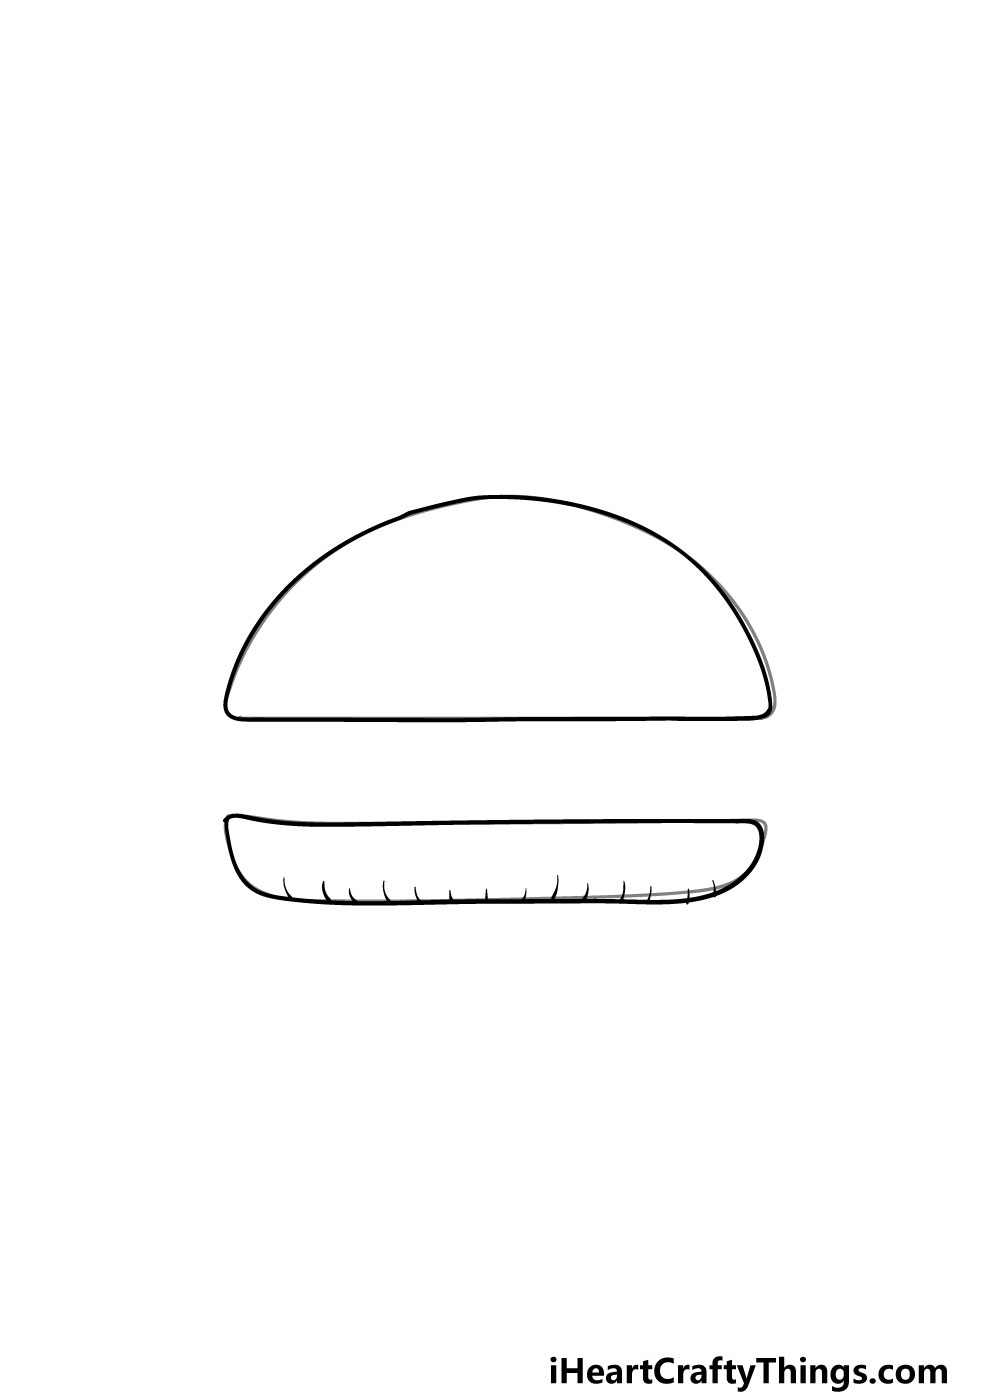 drawing a bun step 3